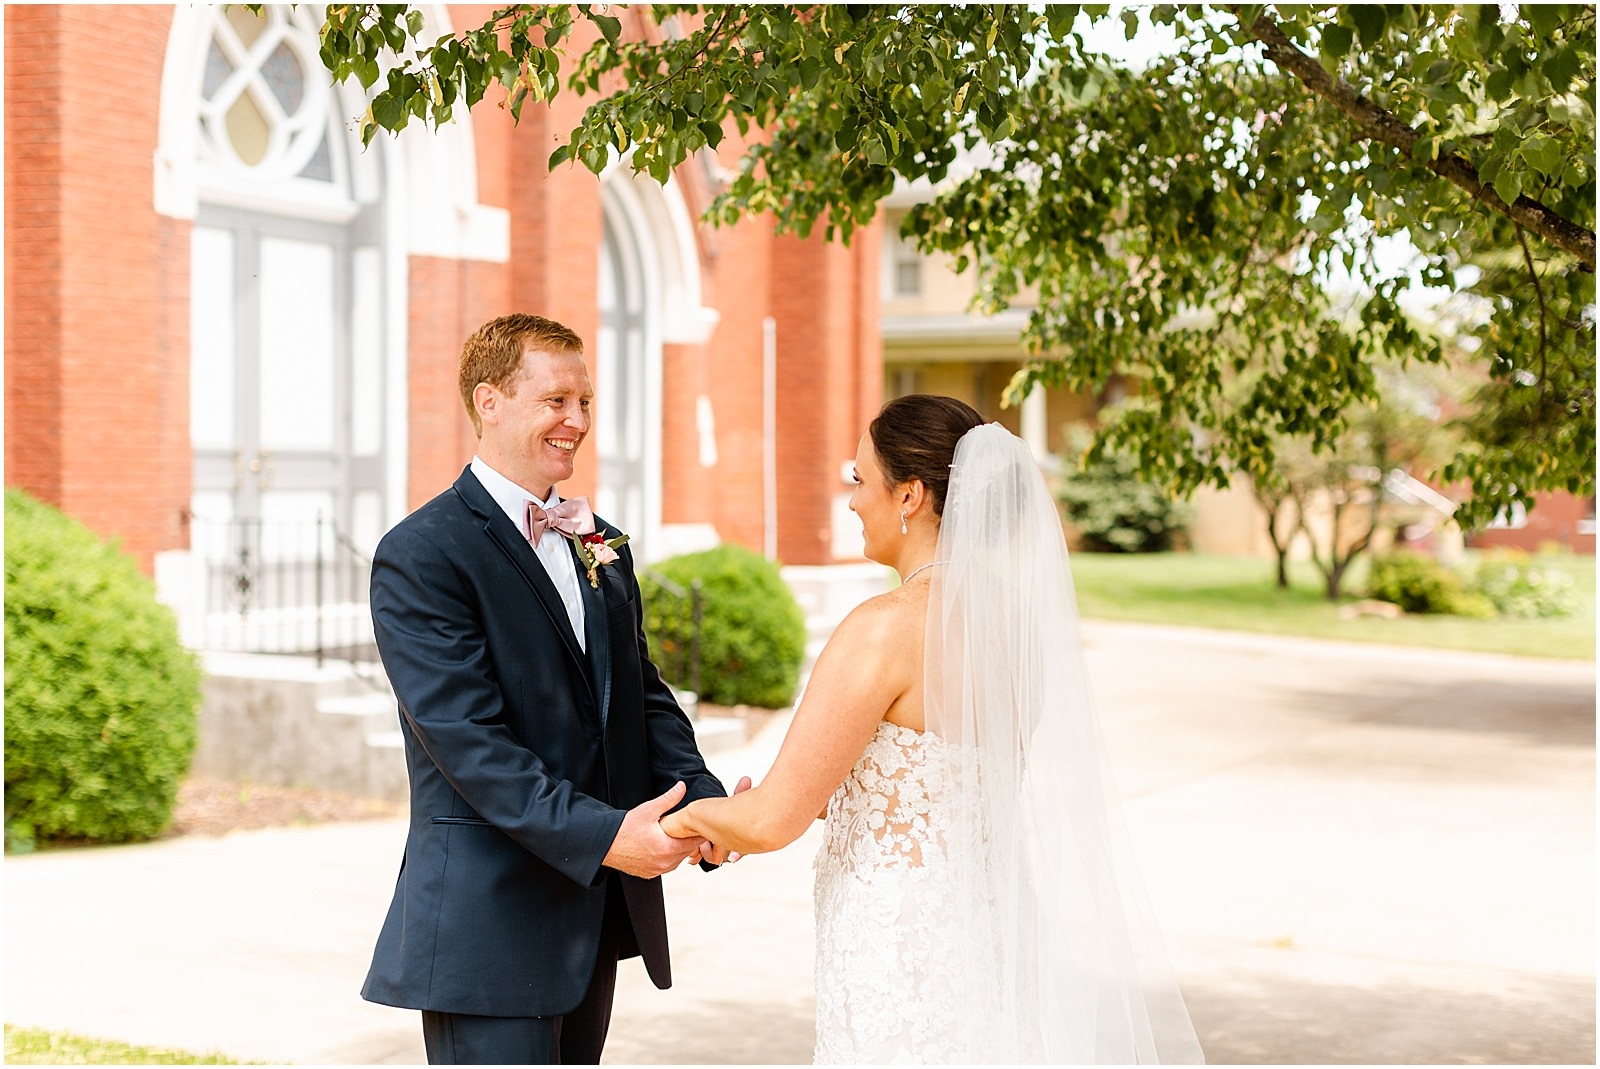 Deidra and Andrew | A Huntingburgh Indiana Wedding Bret and Brandie | Evansville Photographers | @bretandbrandie-0046.jpg